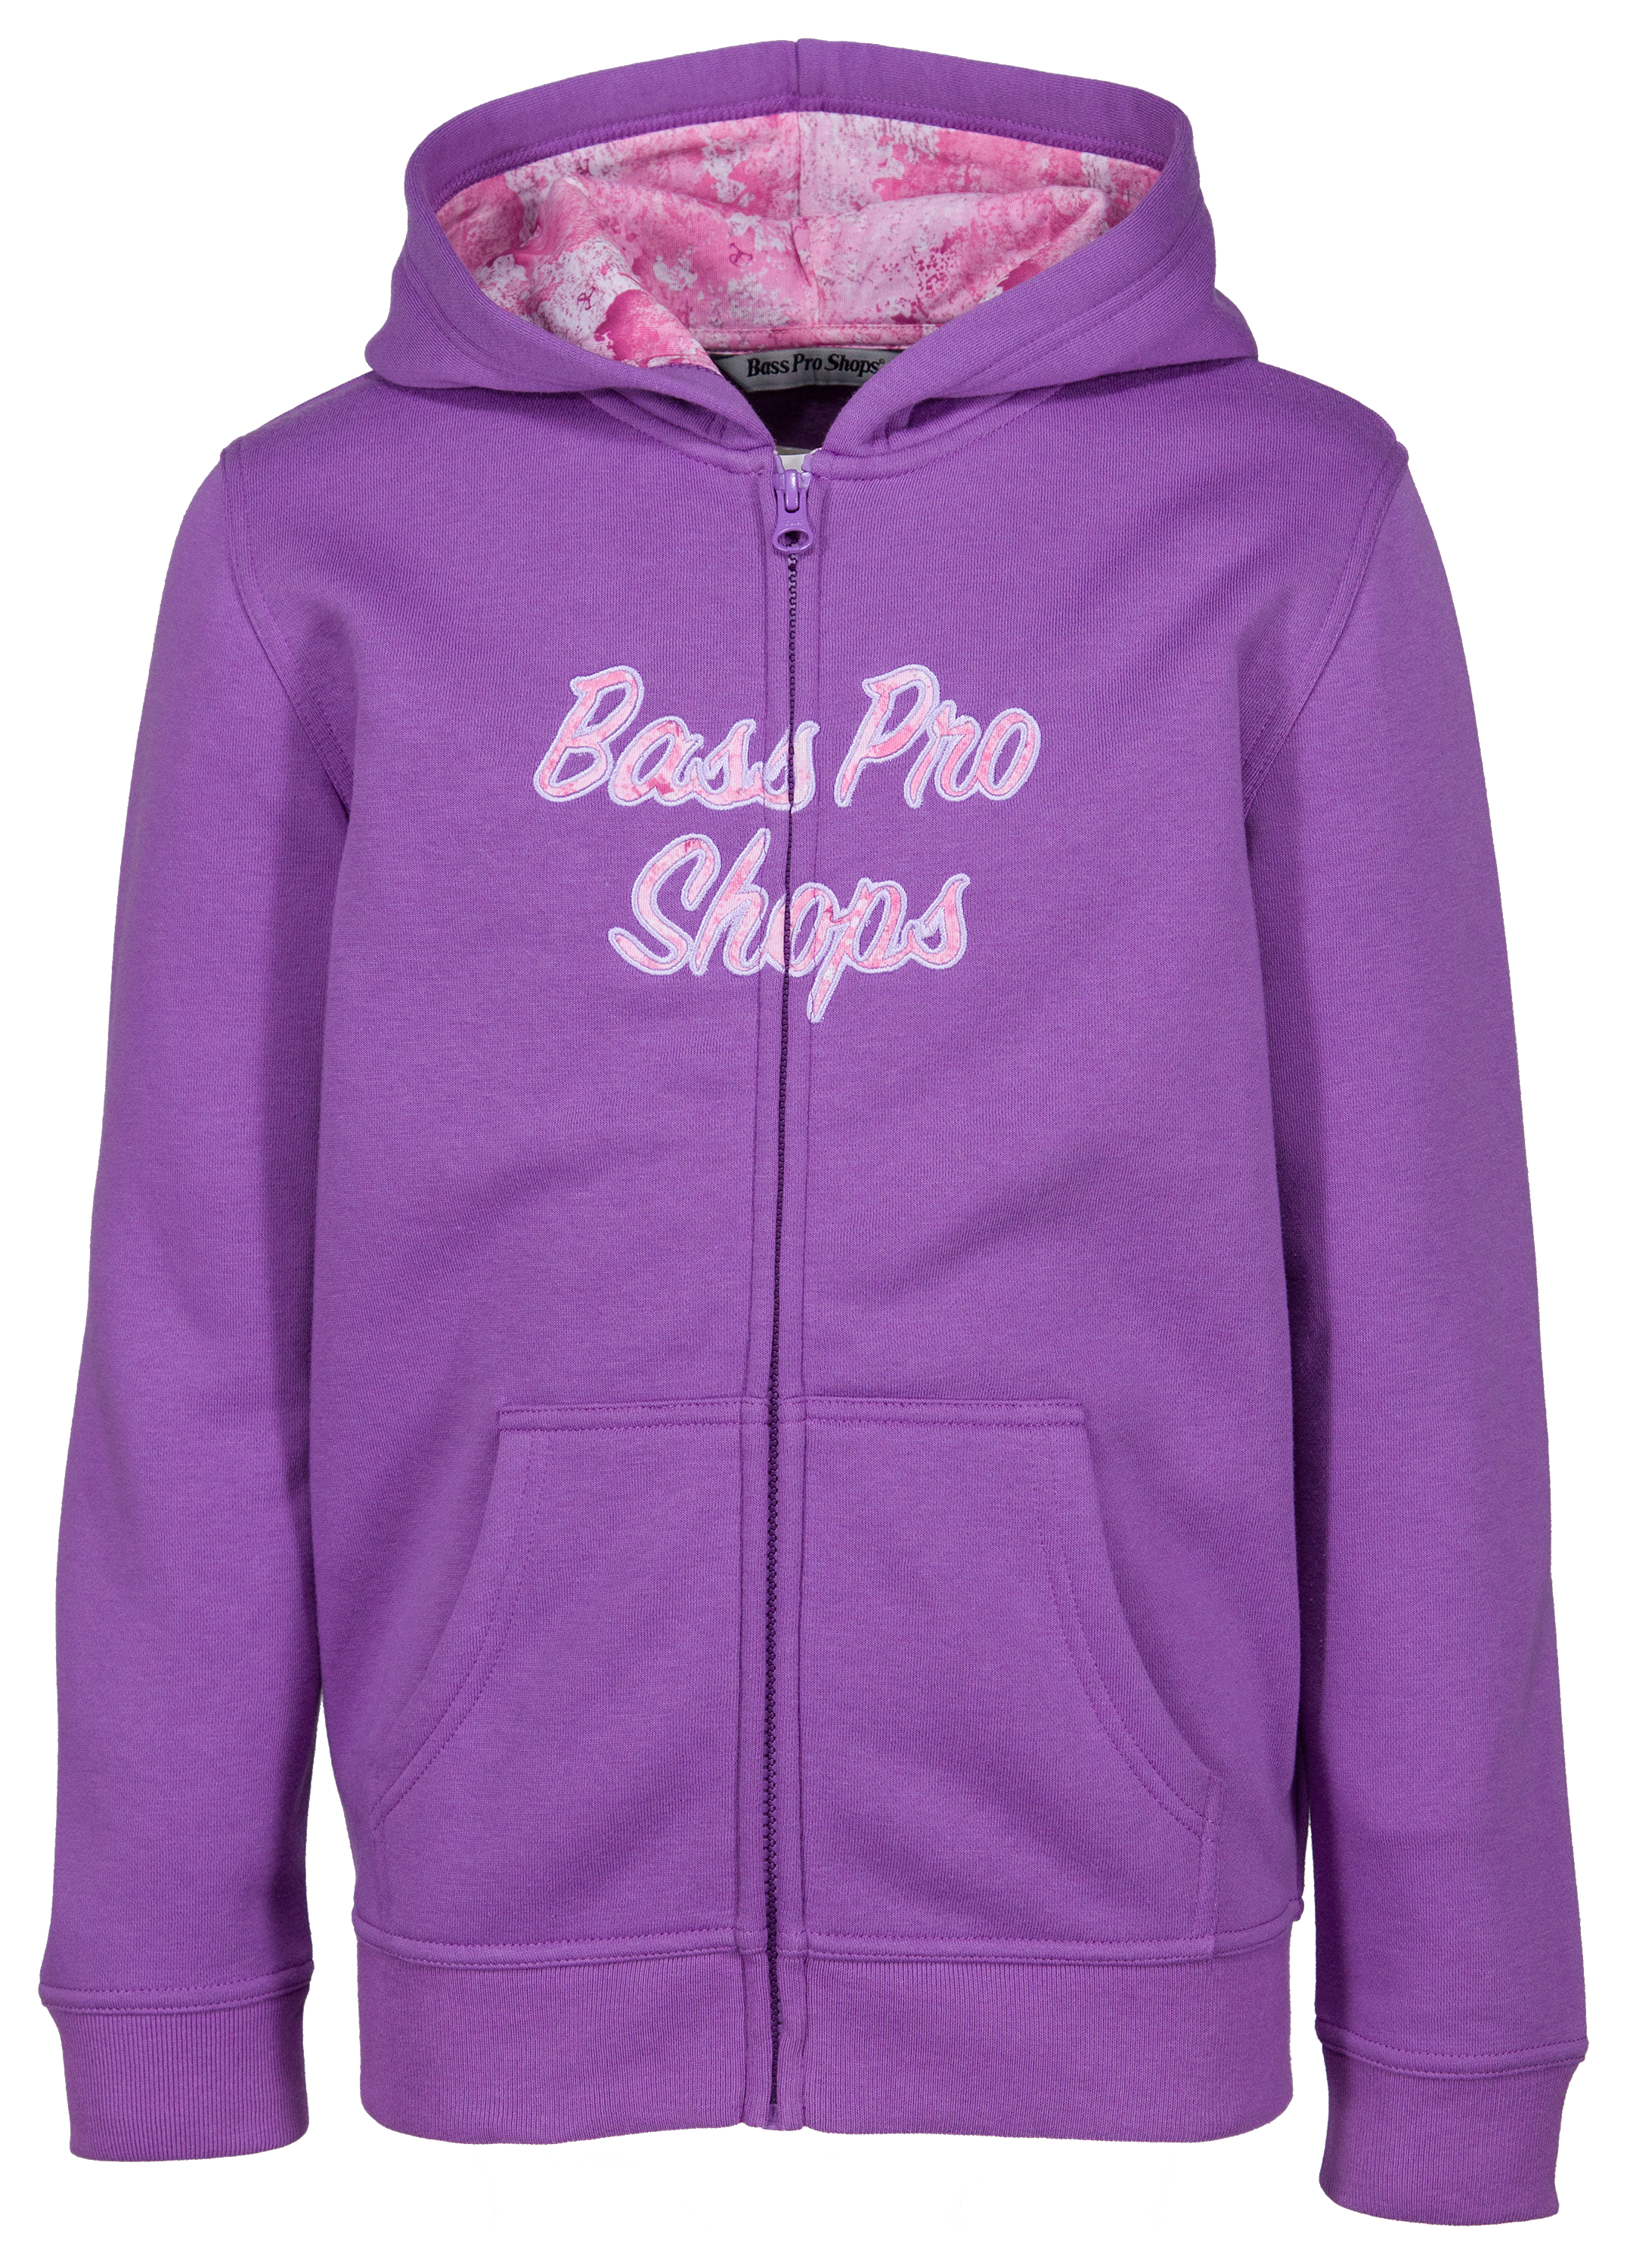 Bass Pro Shops Original Logo Long-Sleeve Hoodie for Ladies